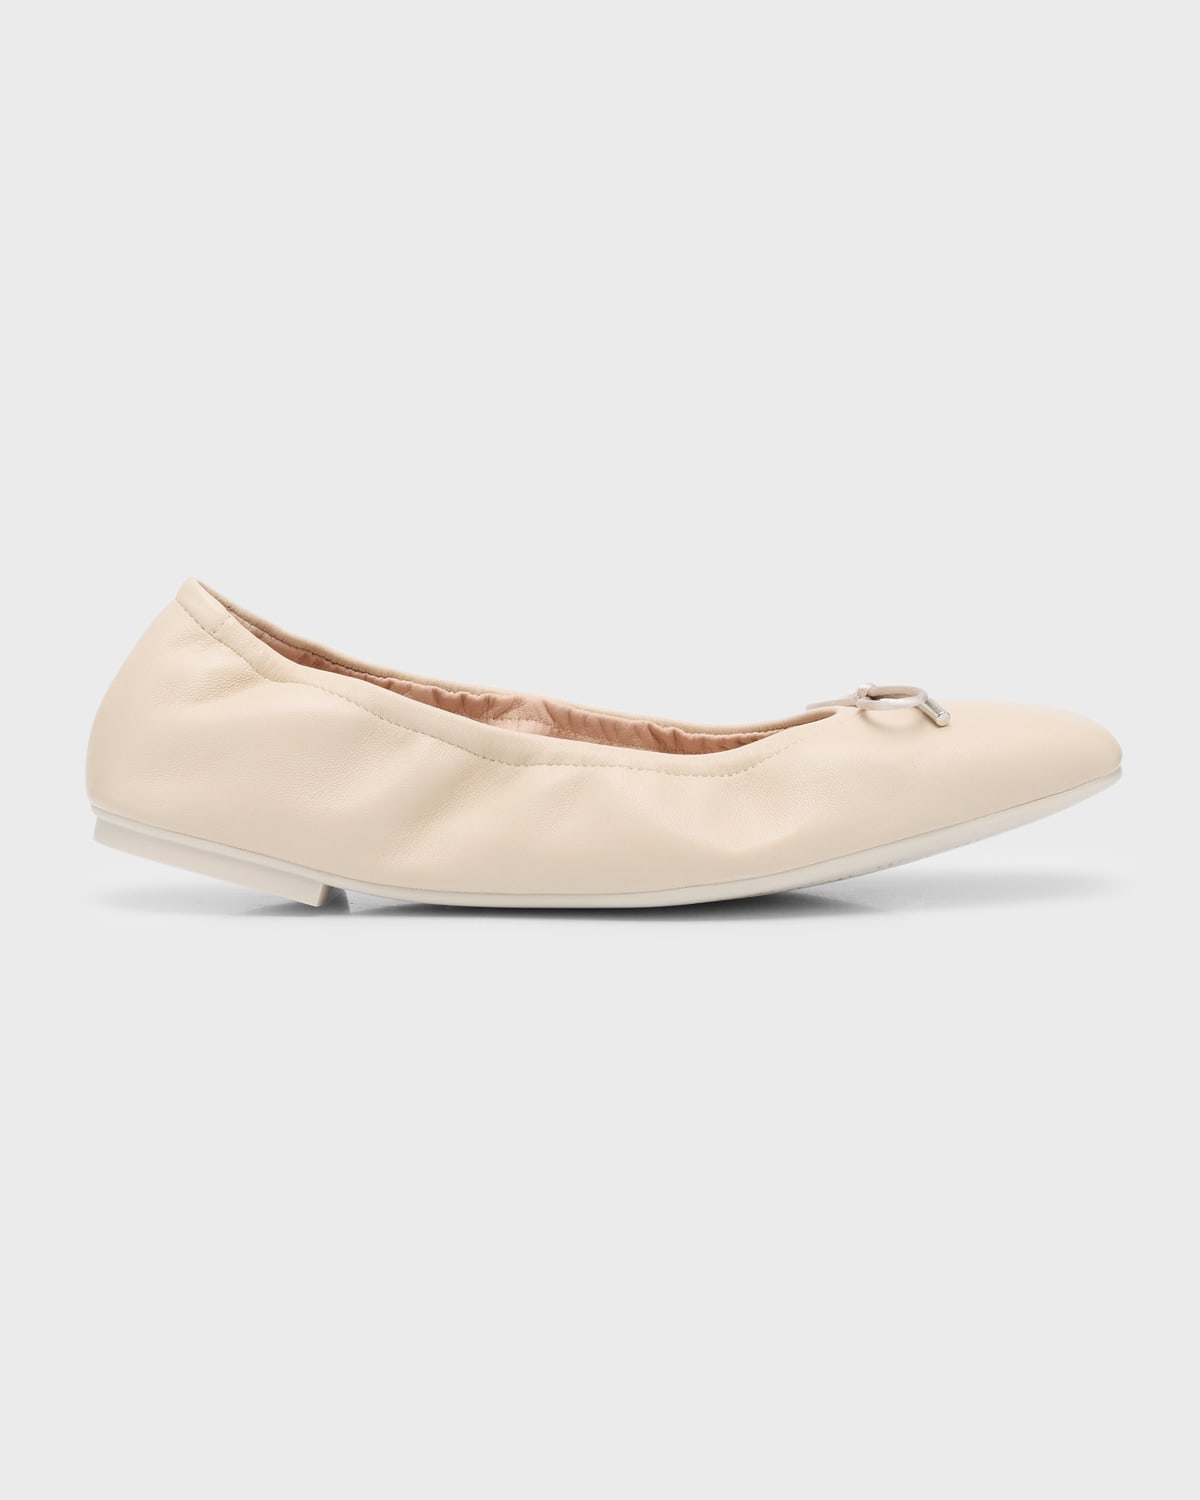 Stuart Weitzman Sleek Mixed Leather Bow Ballerina Flats | Neiman Marcus